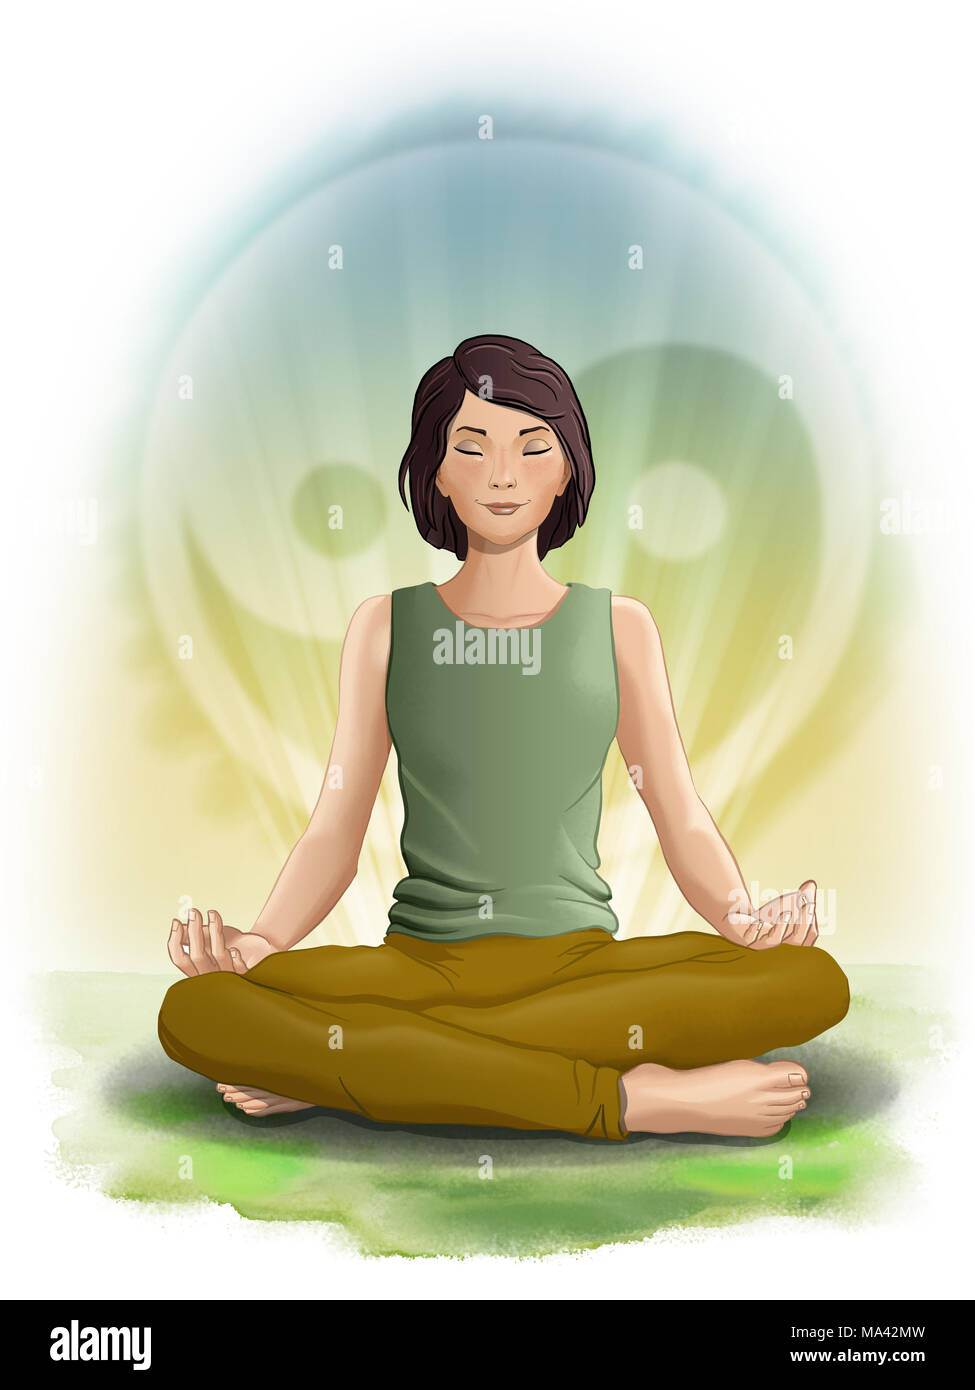 Girl meditating over a taijitu symbol. Digital illustration. Stock Photo